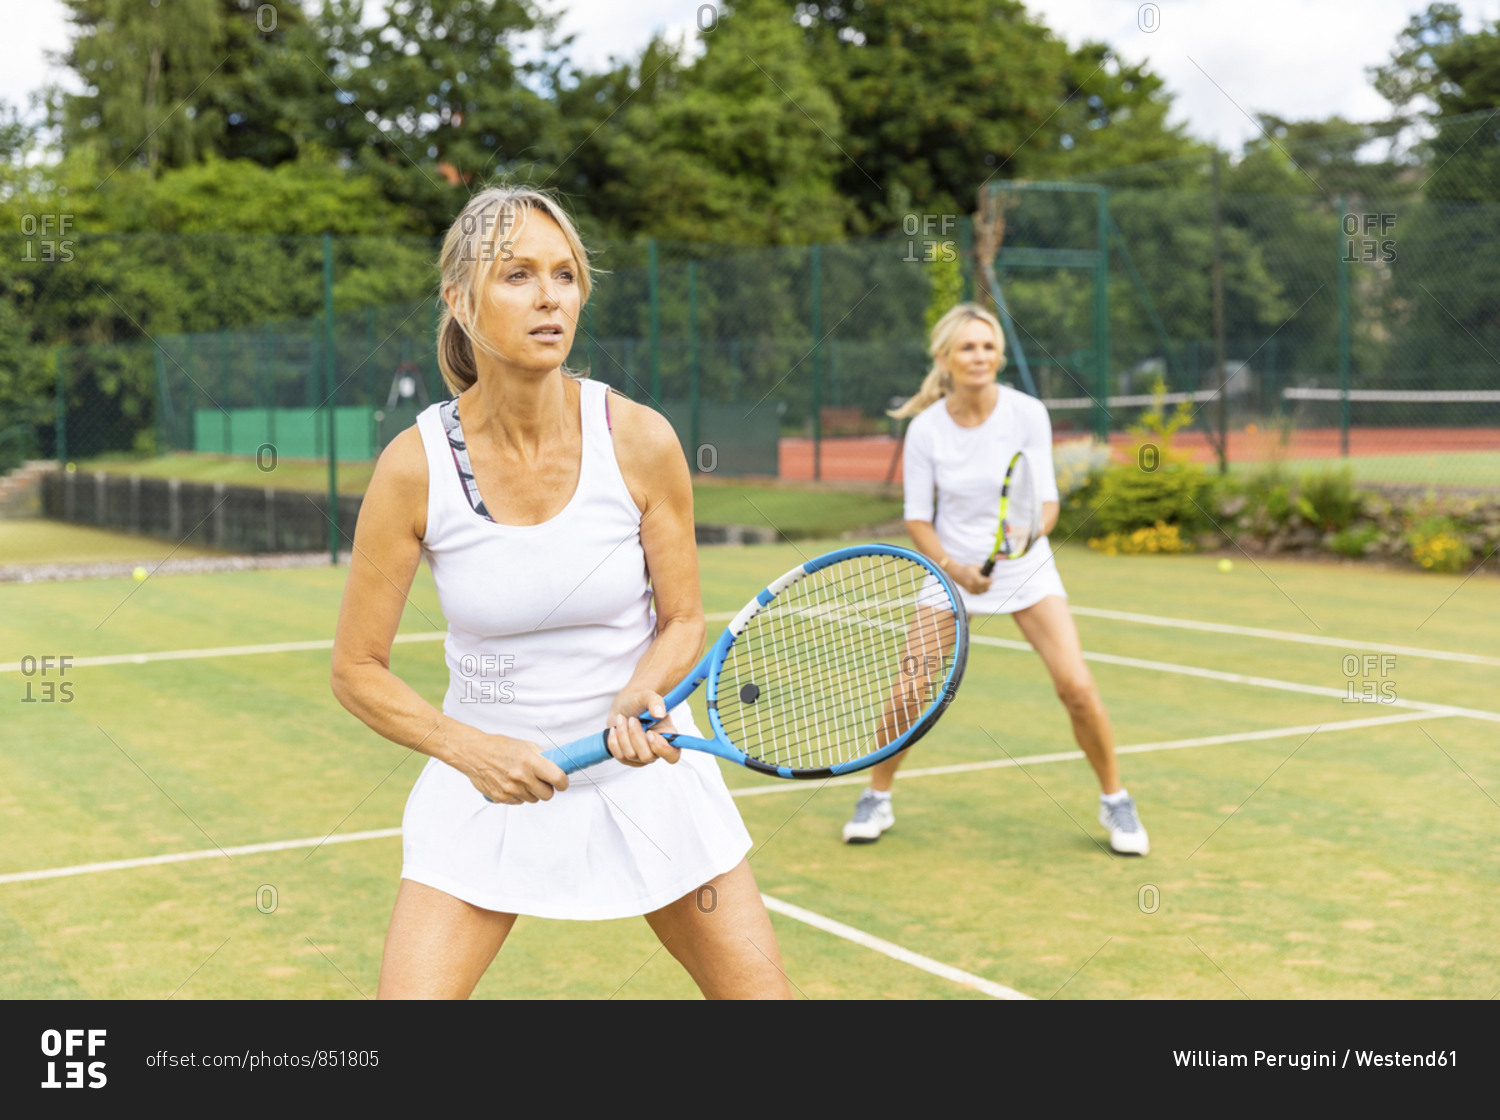 Woman At A Tennis Court Hoodoo Wallpaper